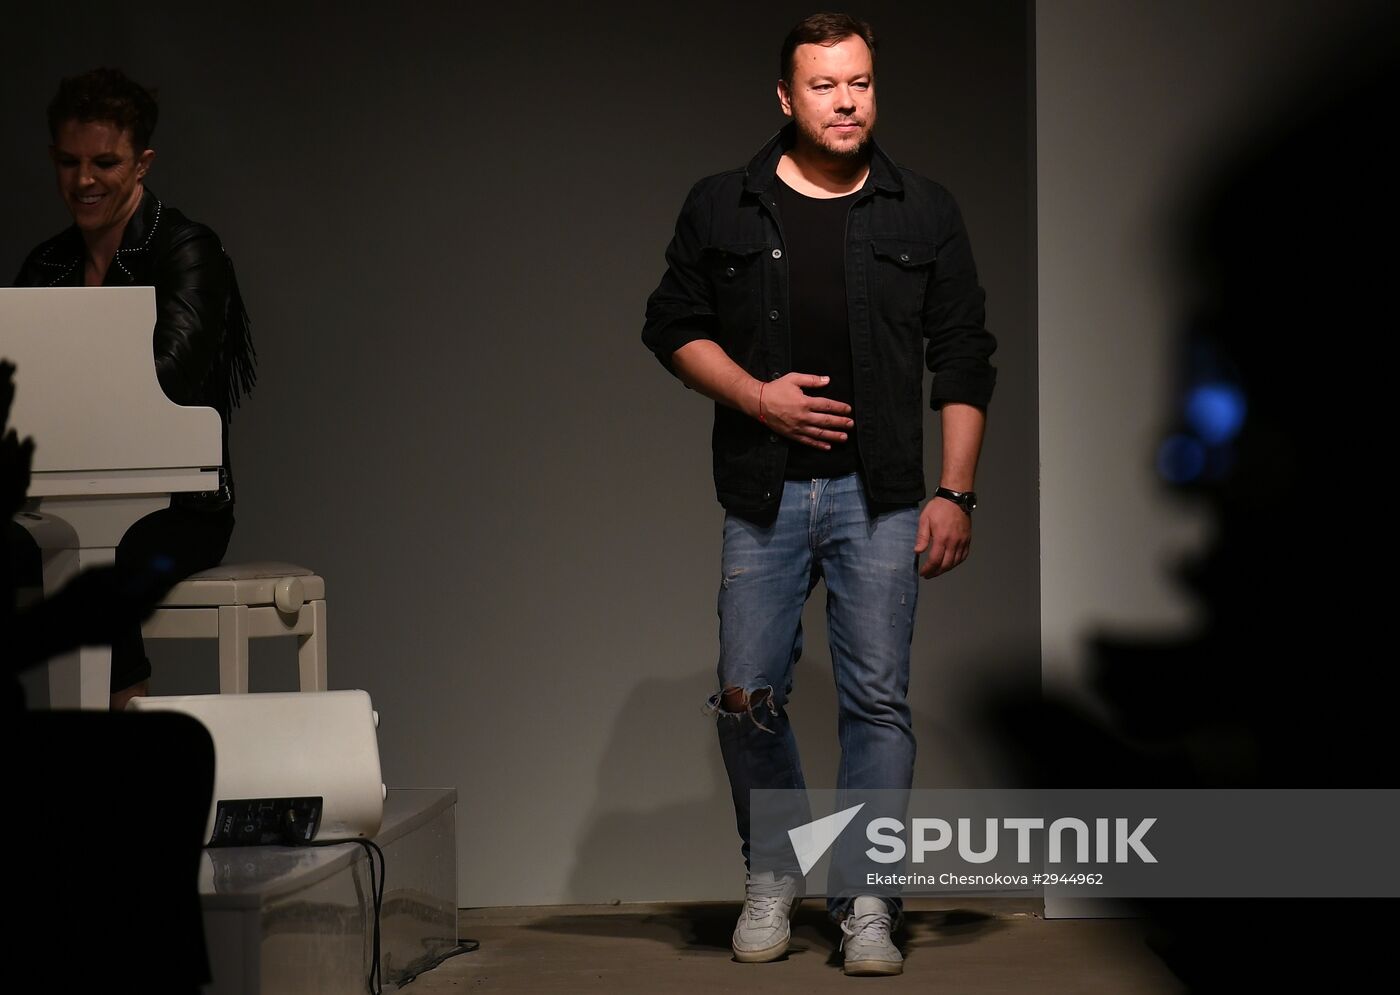 Fashion designer Igor Chapurin shows off his new collection